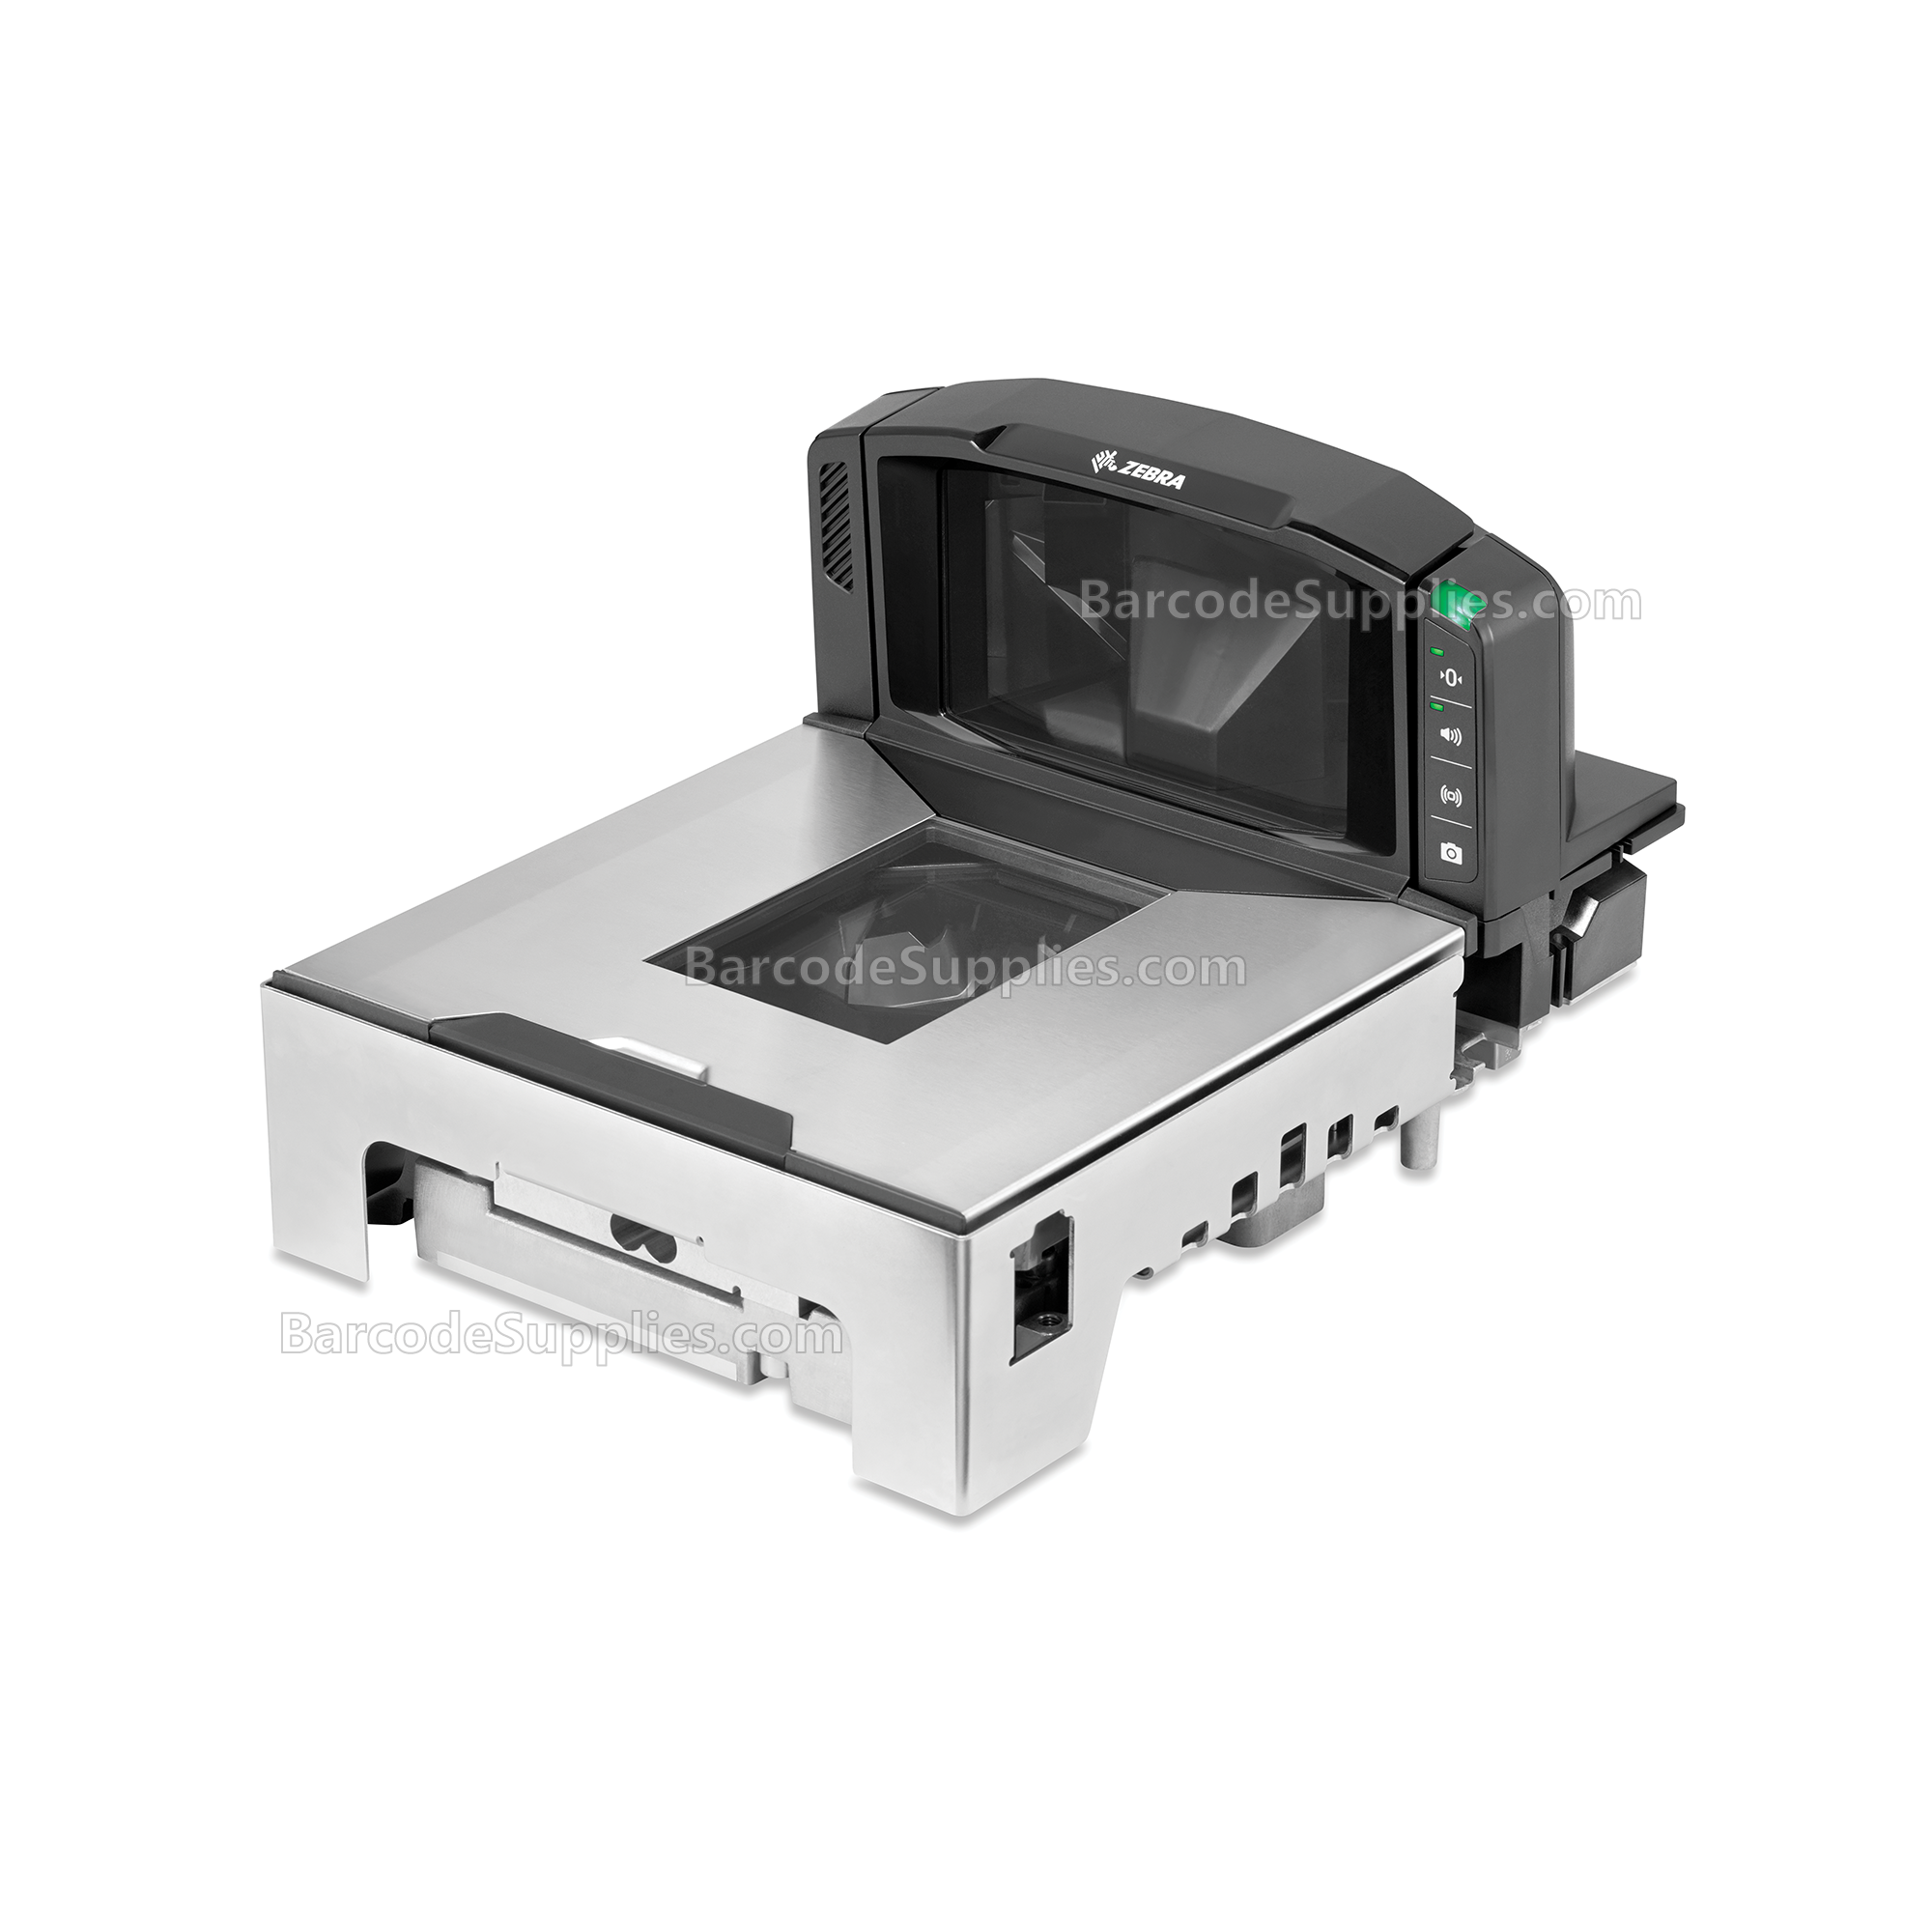 Zebra MP7000: Multiplane scanner, medium, sapphire glass, color camera module portrait, Worldwide